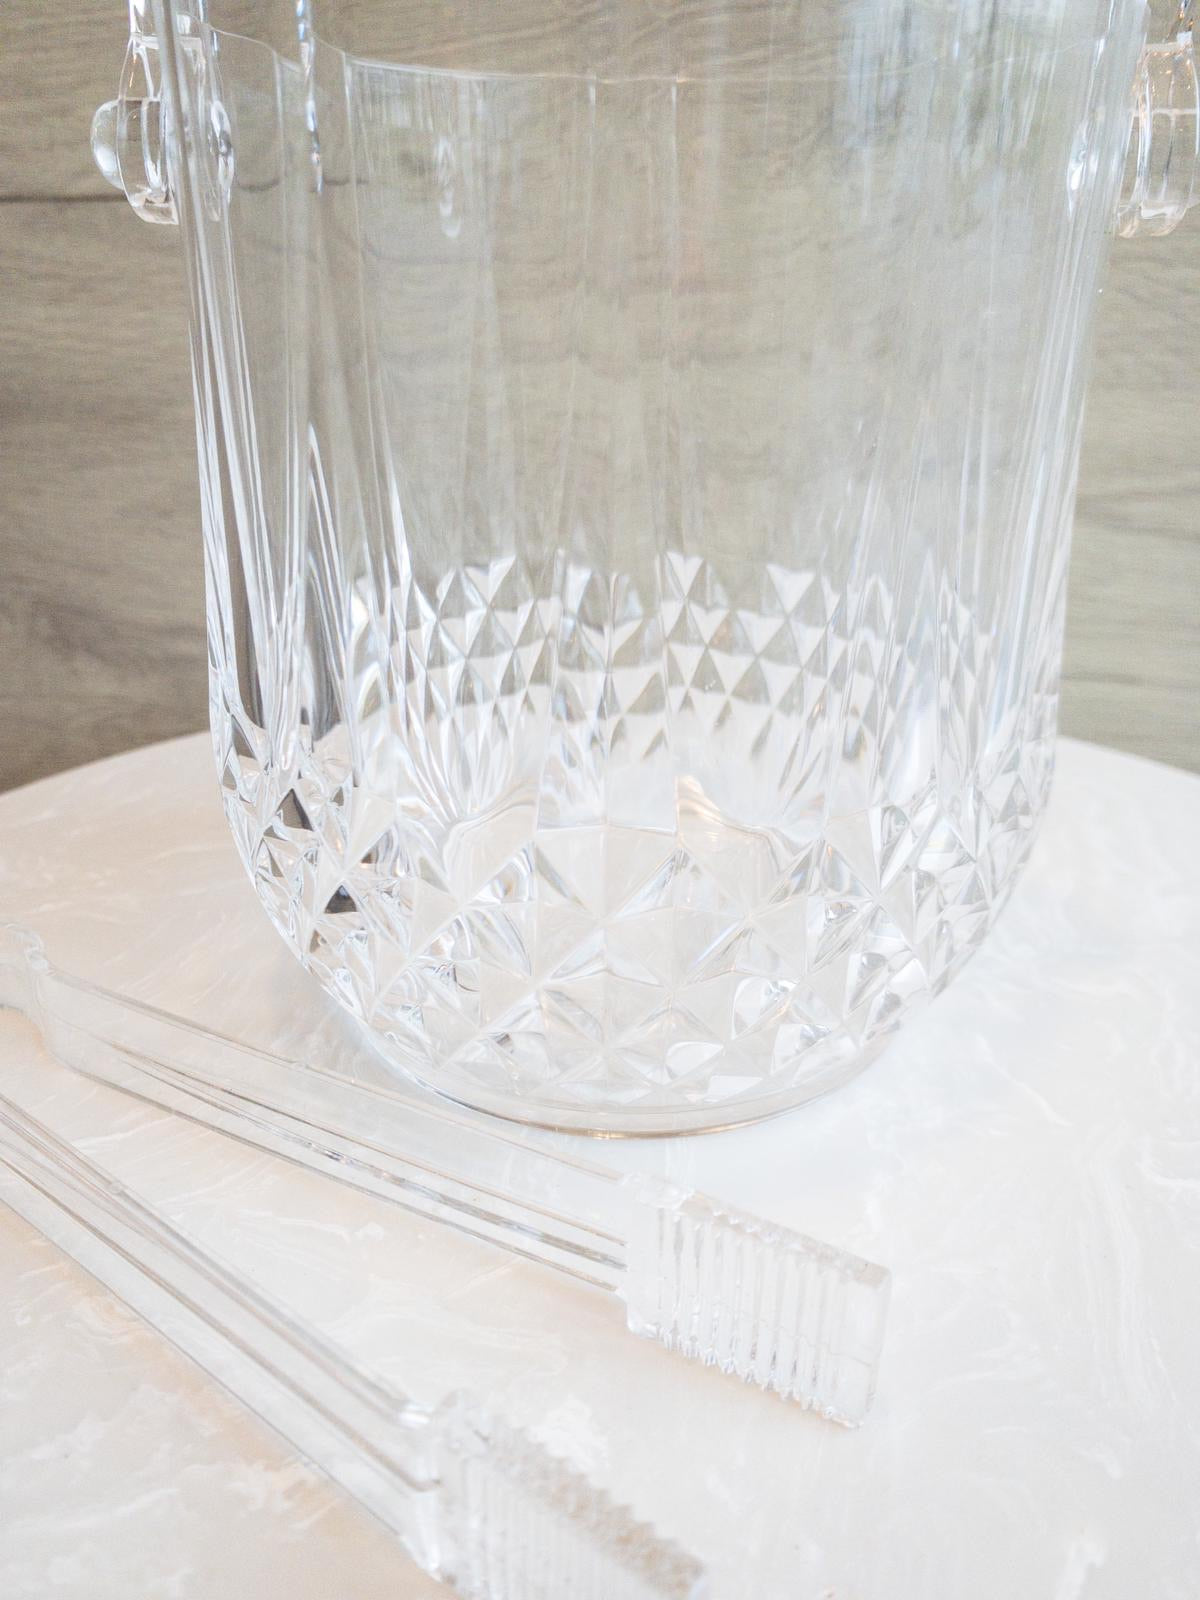 Acrylic Crystal Ice Bucket